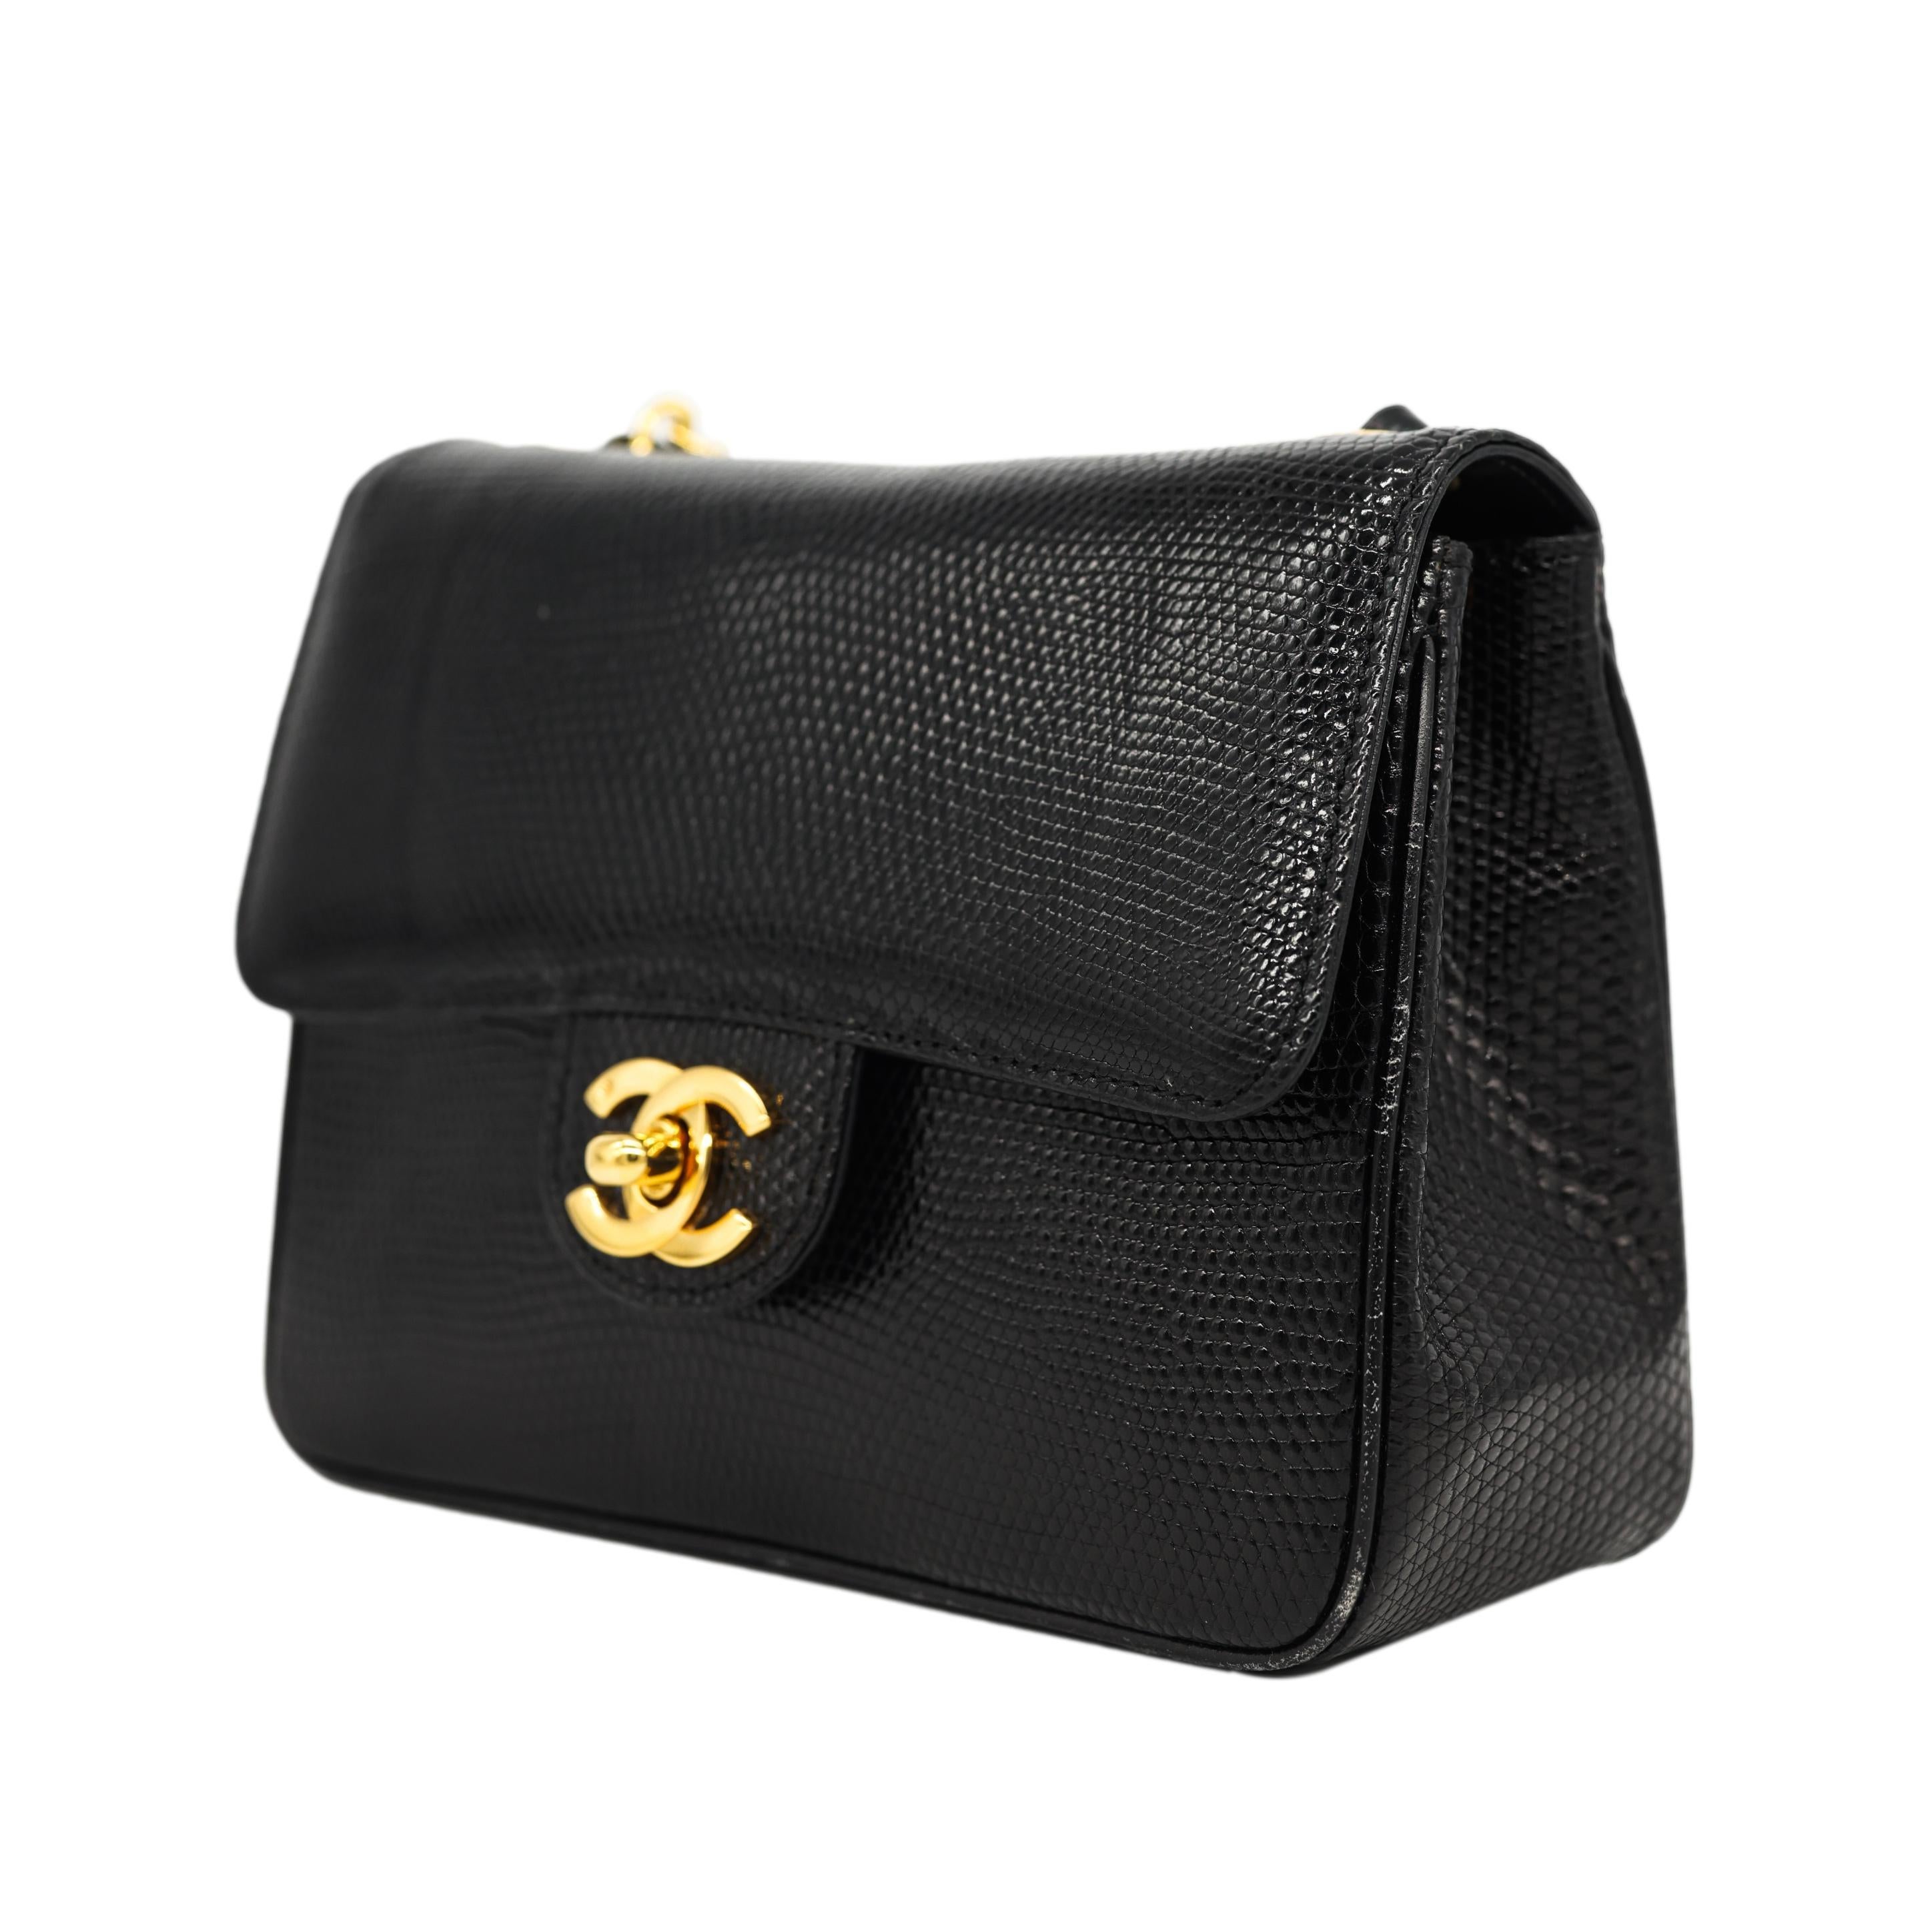 Women's or Men's Chanel Vintage Mini Black Lizard Envelope Cross Body Flap Bag with Gold Hardware